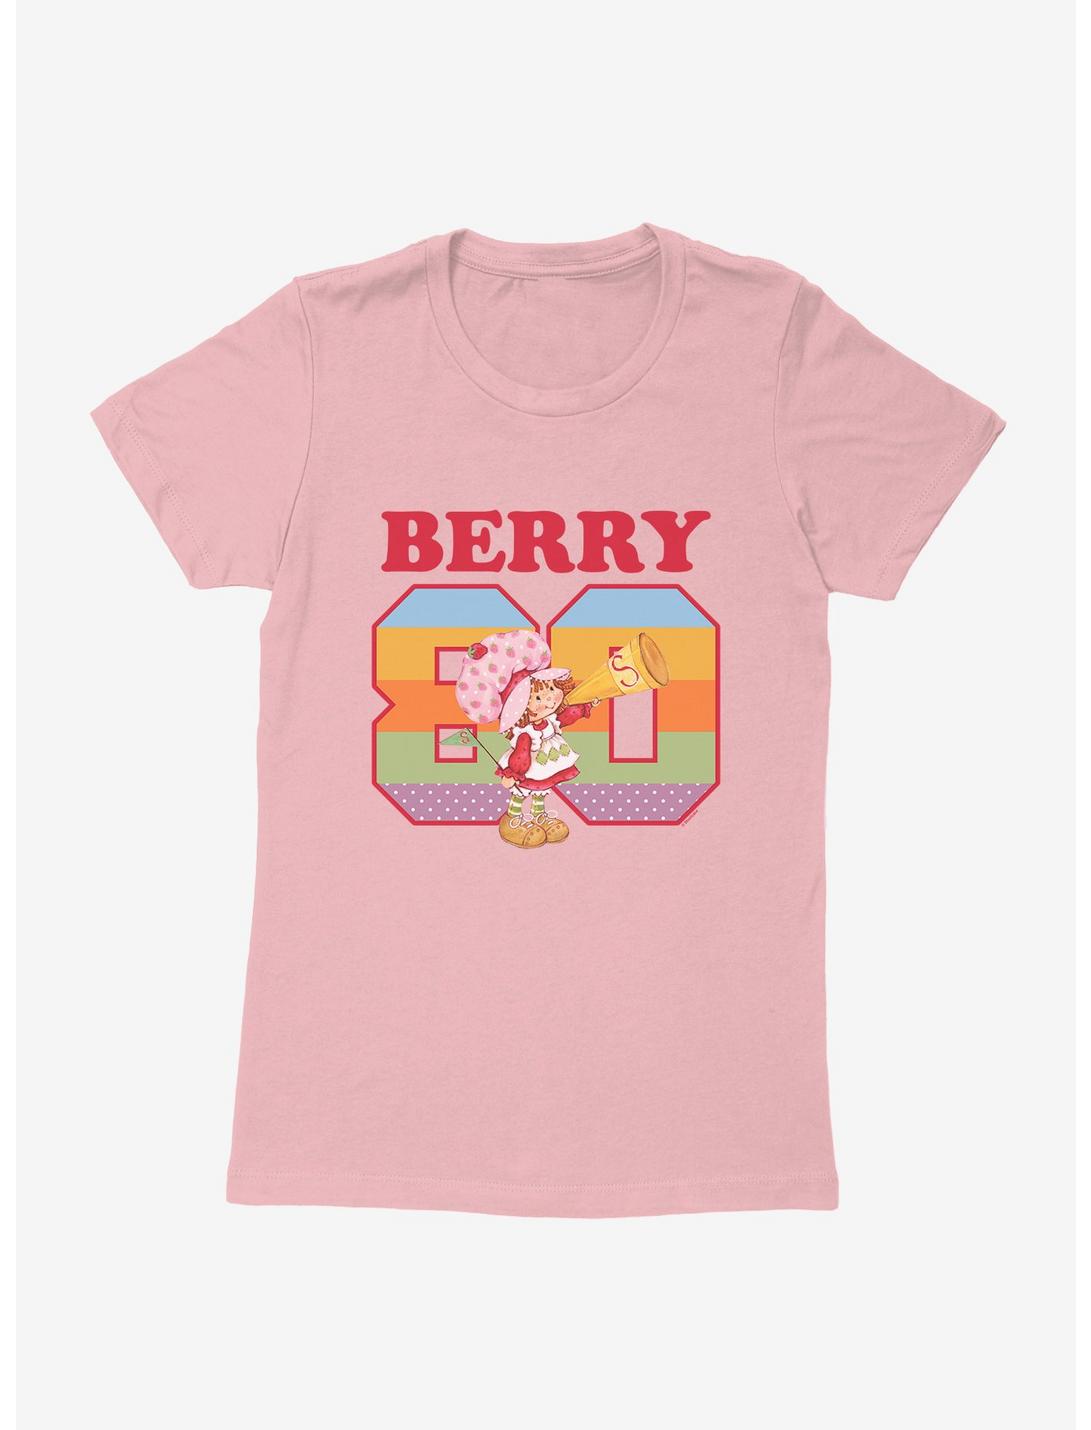 Strawberry Shortcake Berry 80 Retro Womens T-Shirt, LIGHT PINK, hi-res